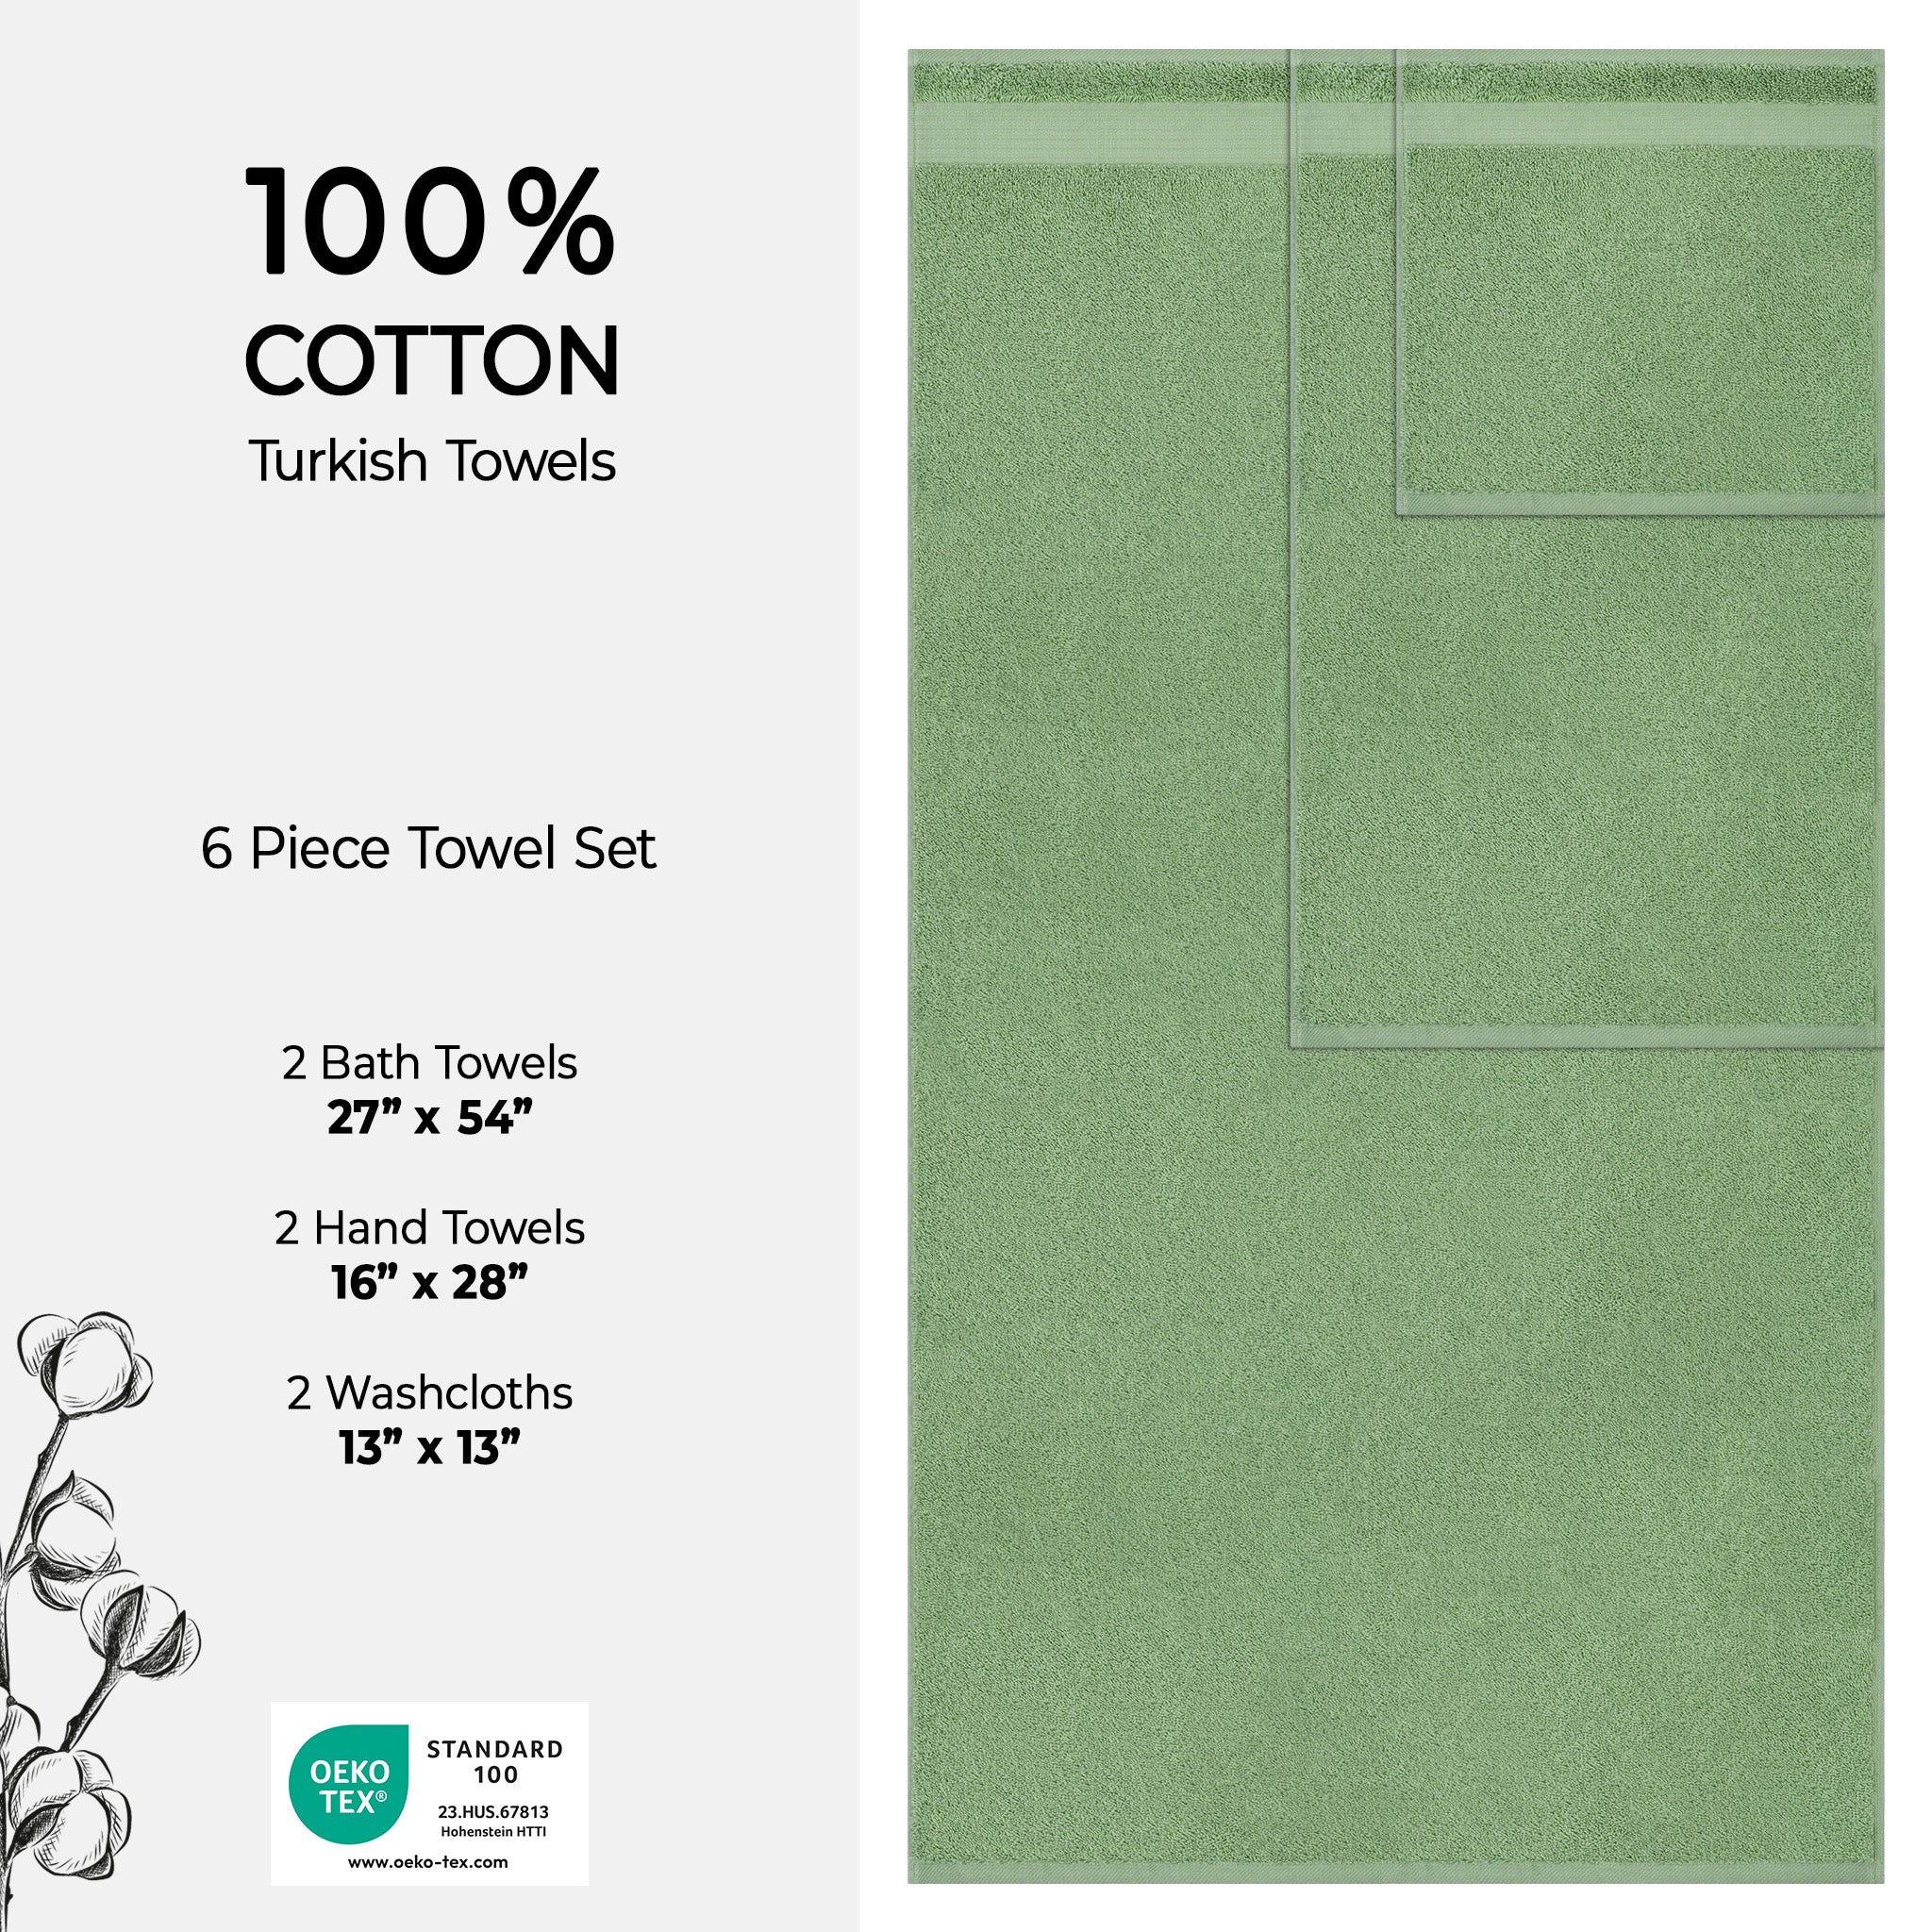 American Soft Linen Bekos 100% Cotton Turkish Towels 6 Piece Bath Towel Set -sage-green-04